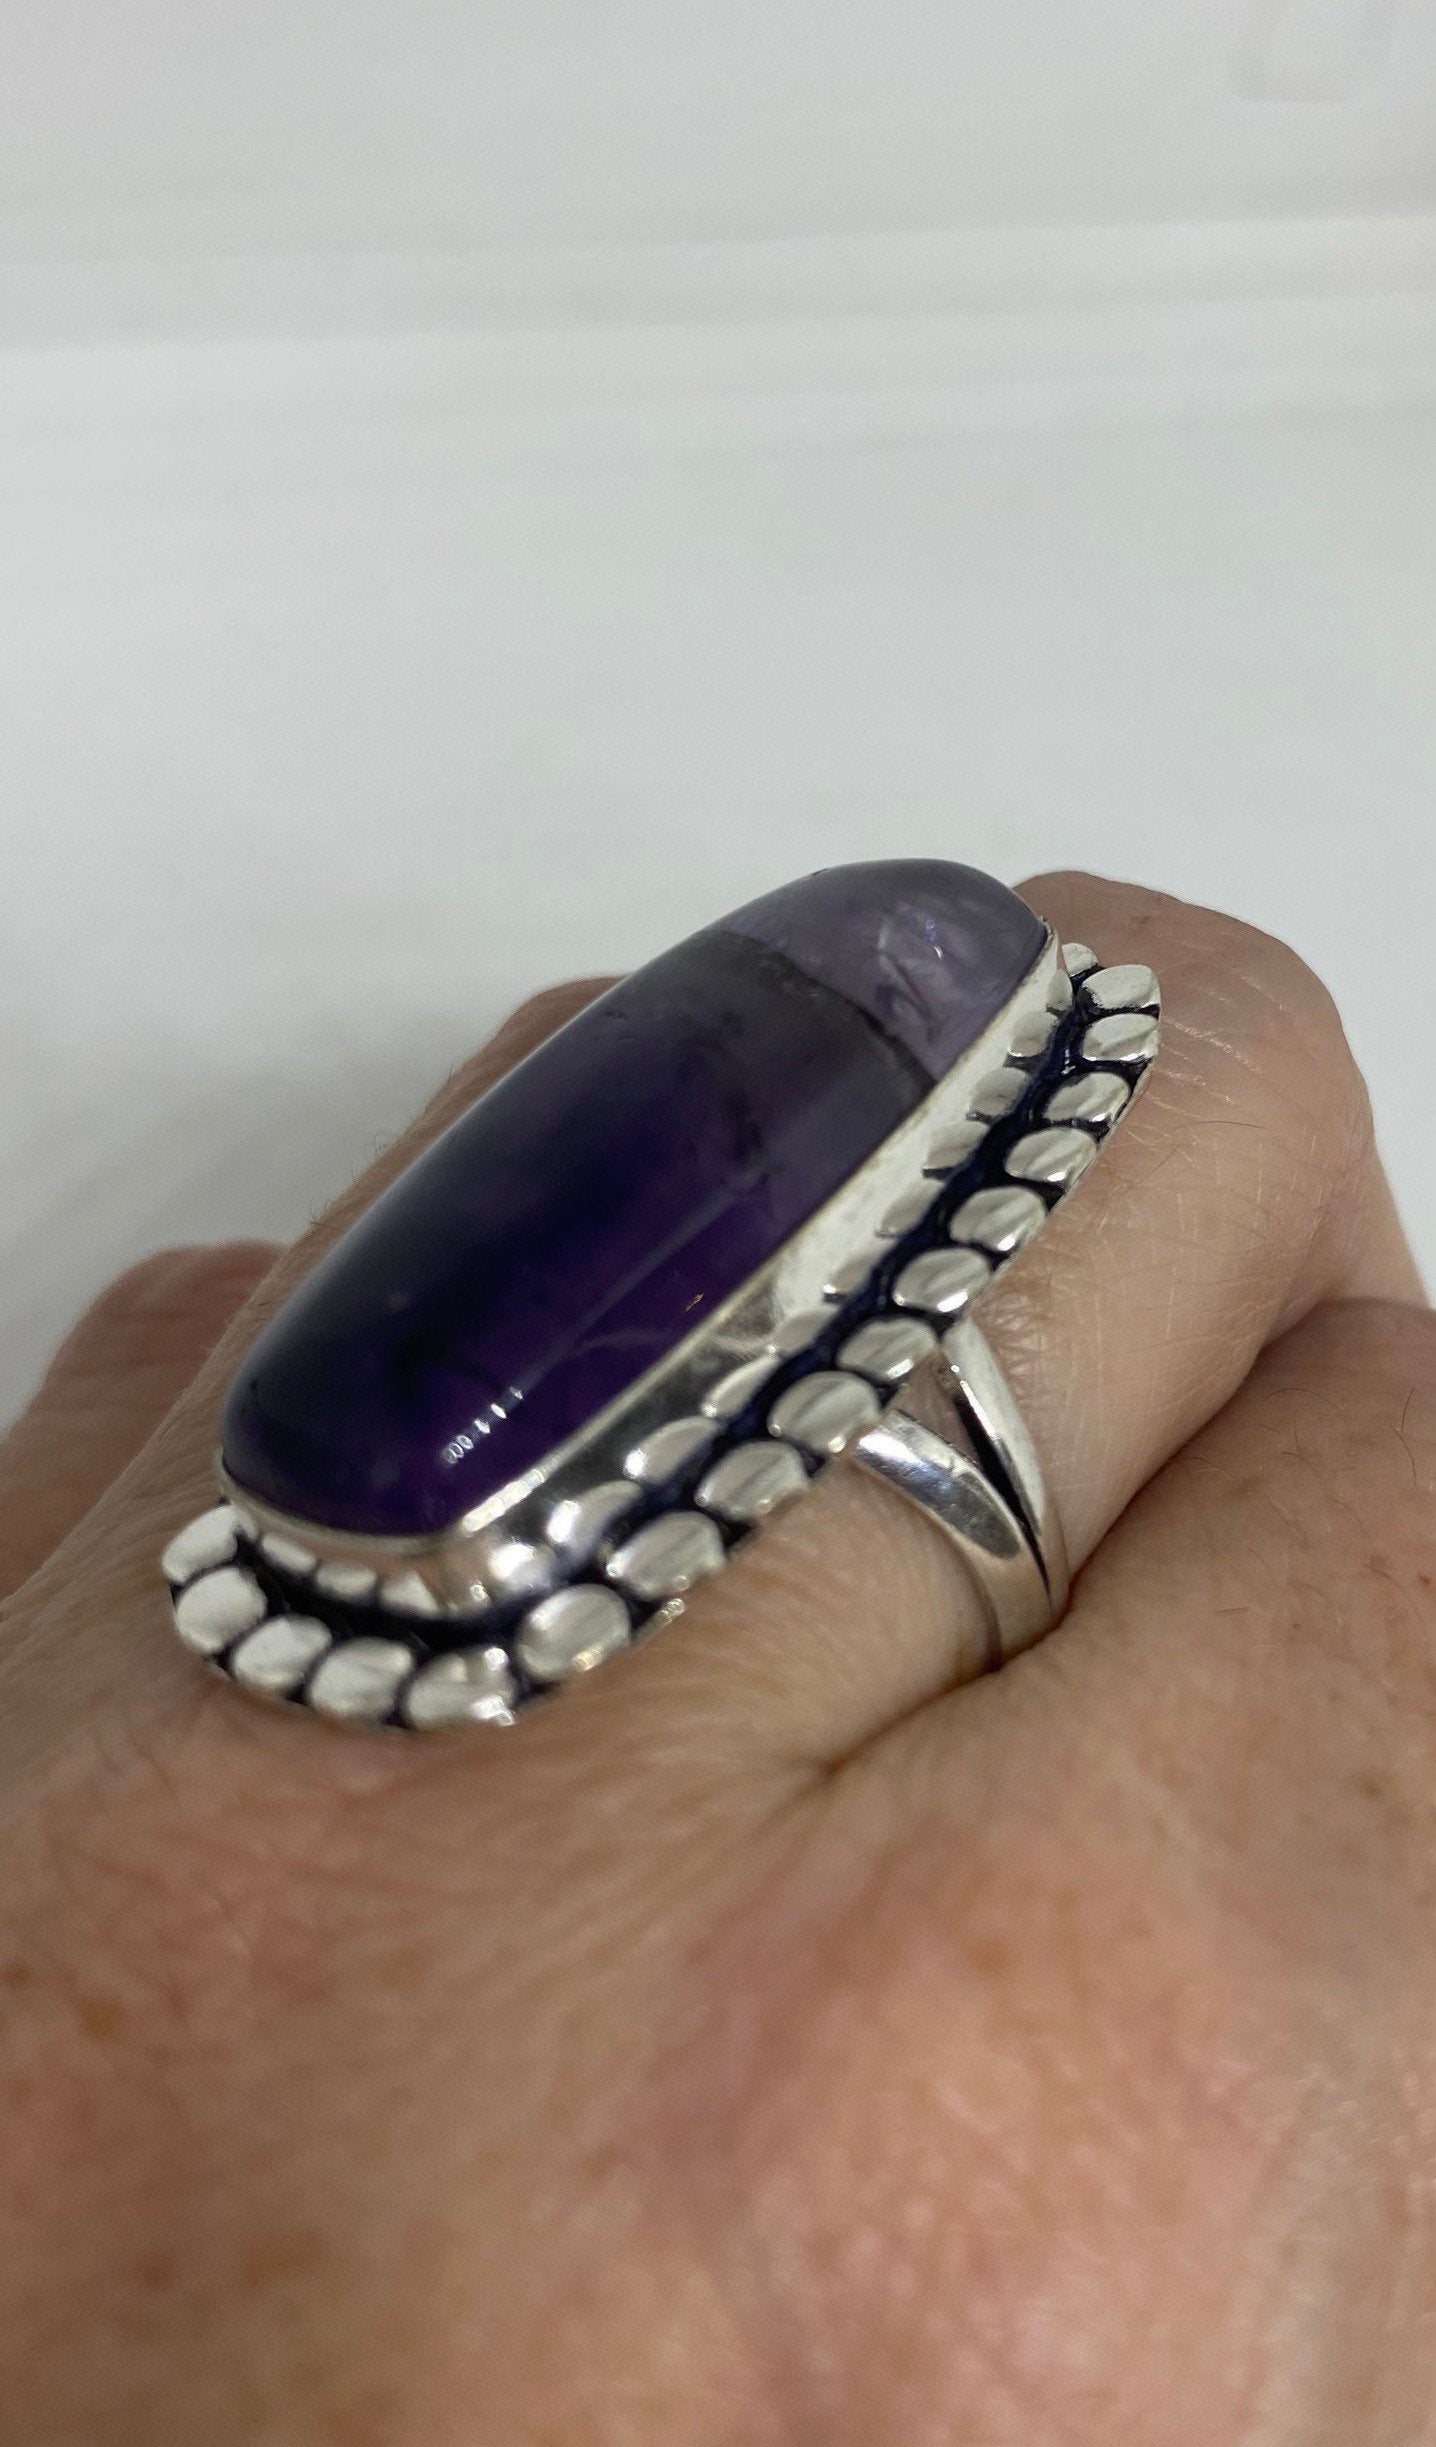 Vintage Boho Purple Amethyst Cocktail Ring Size 8